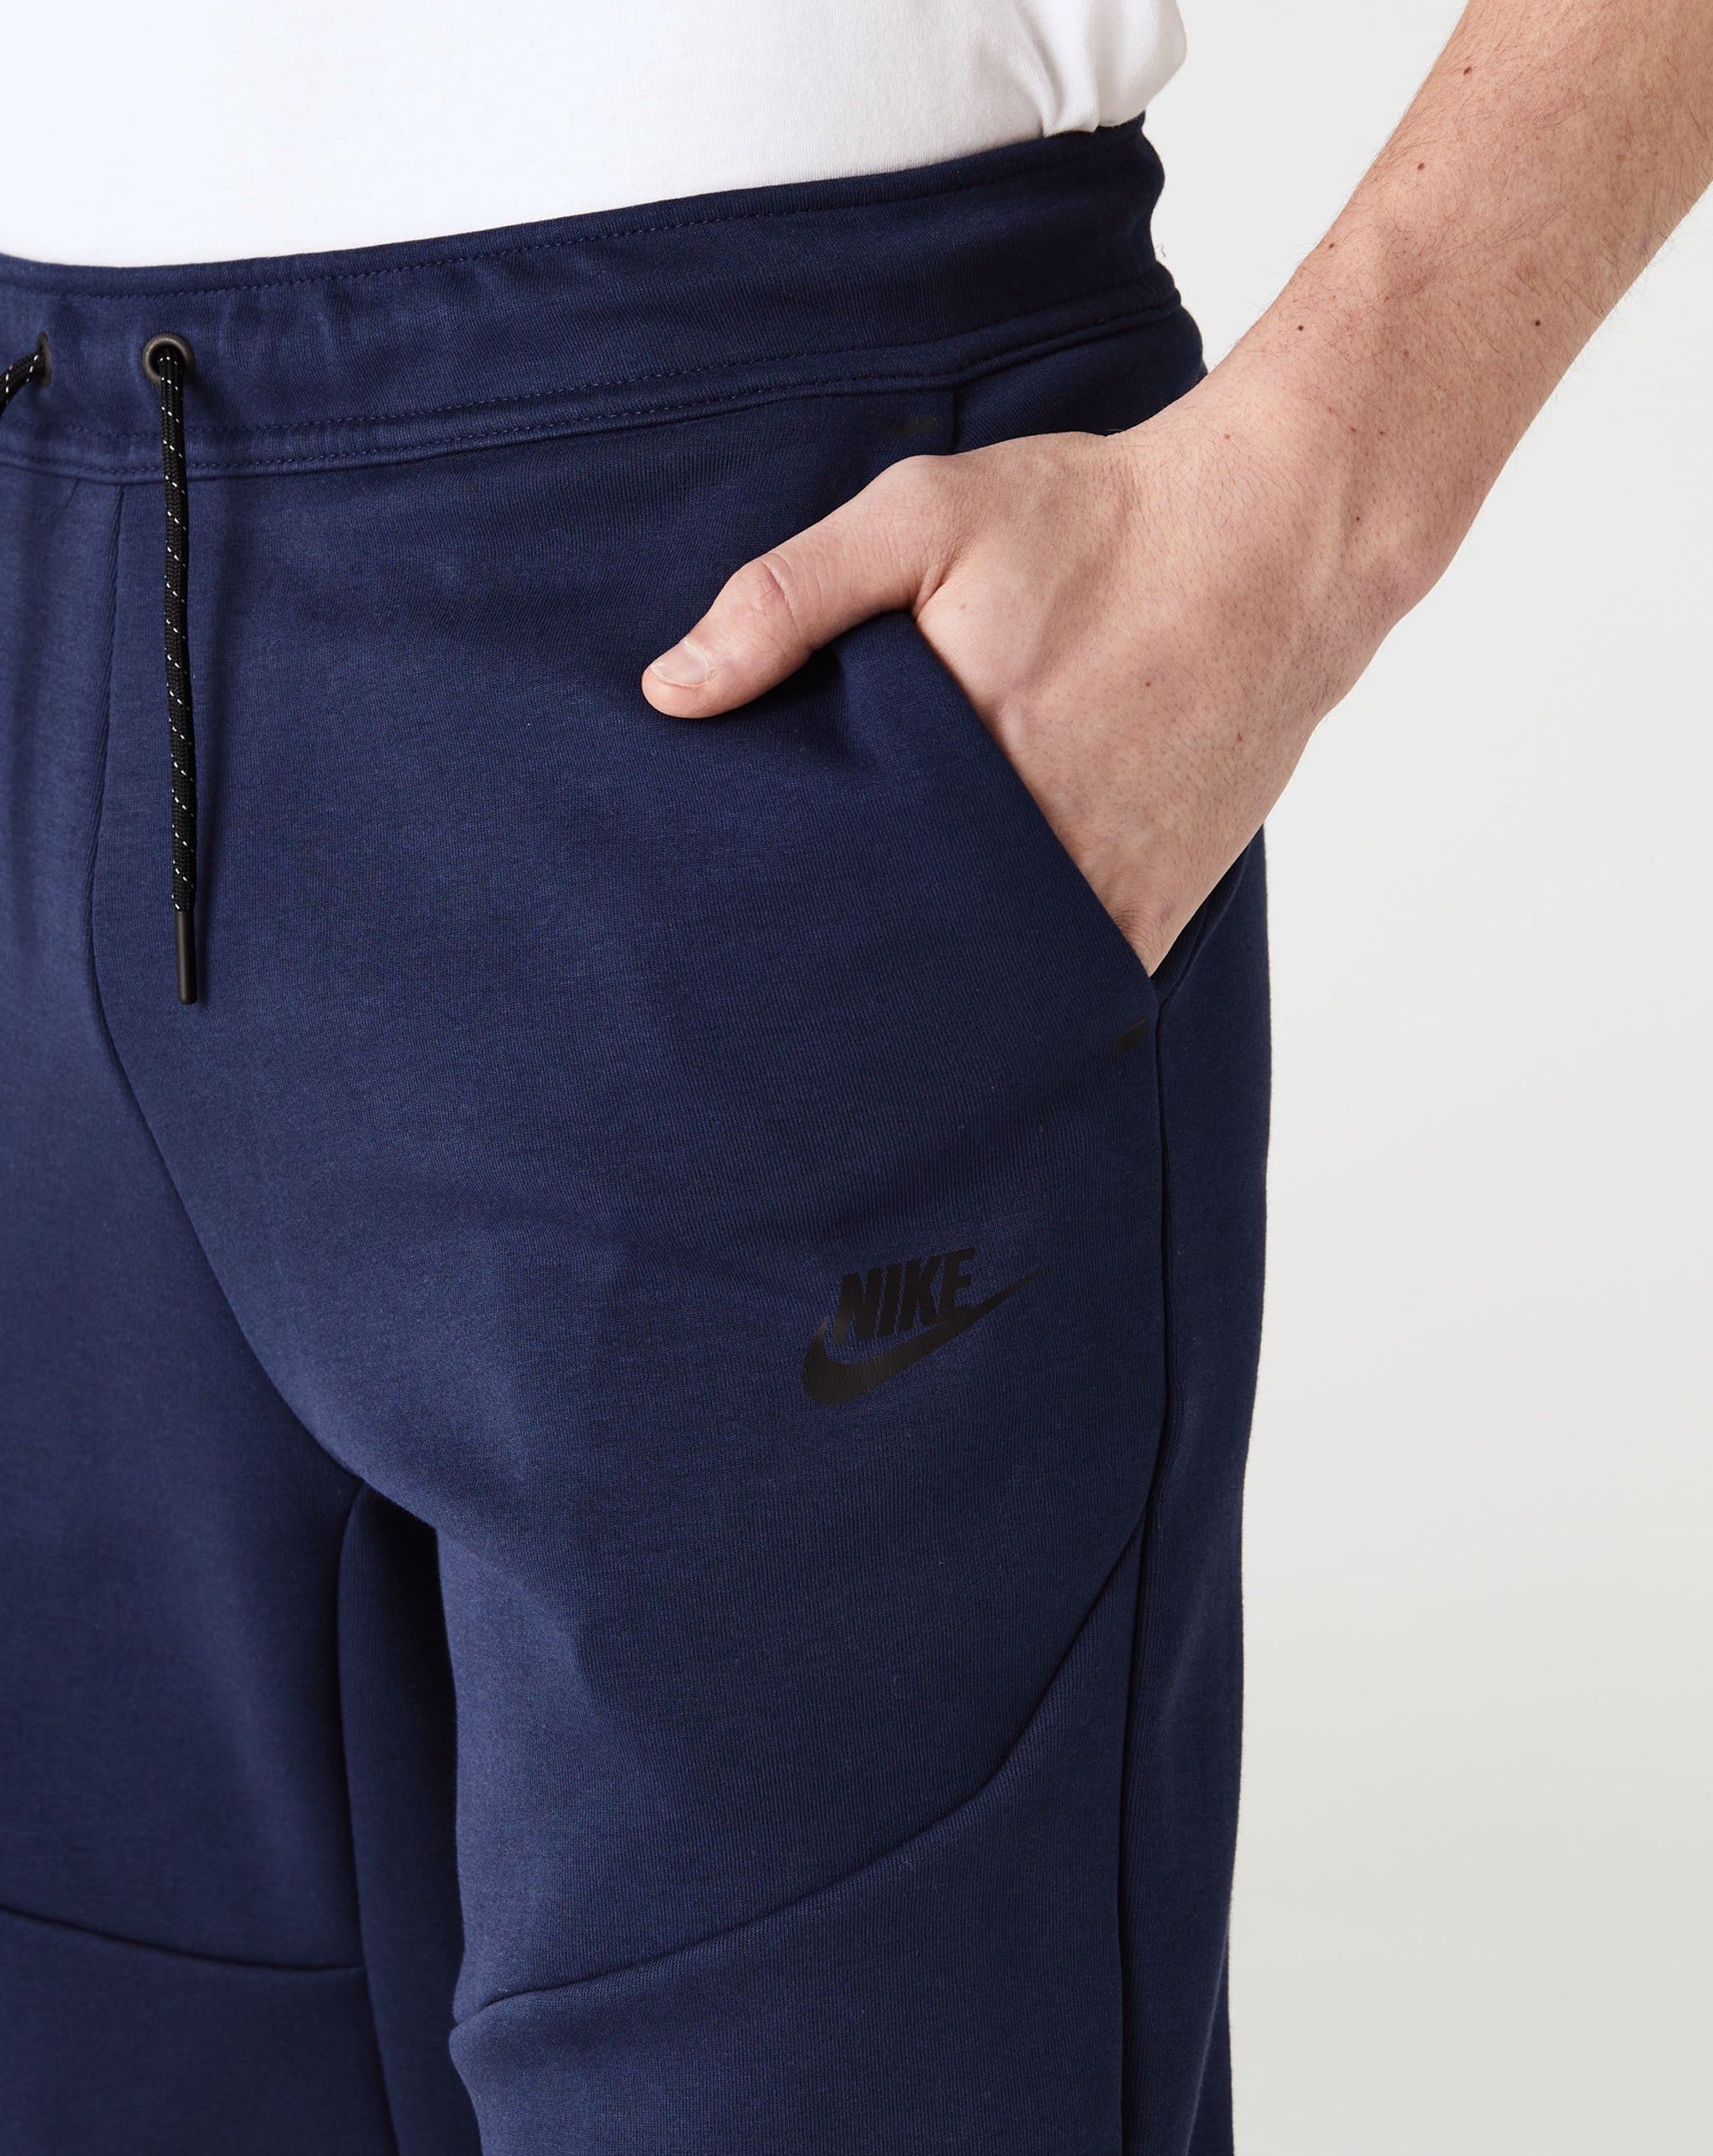 Nike Tech Fleece Pants - Rule of Next Apparel